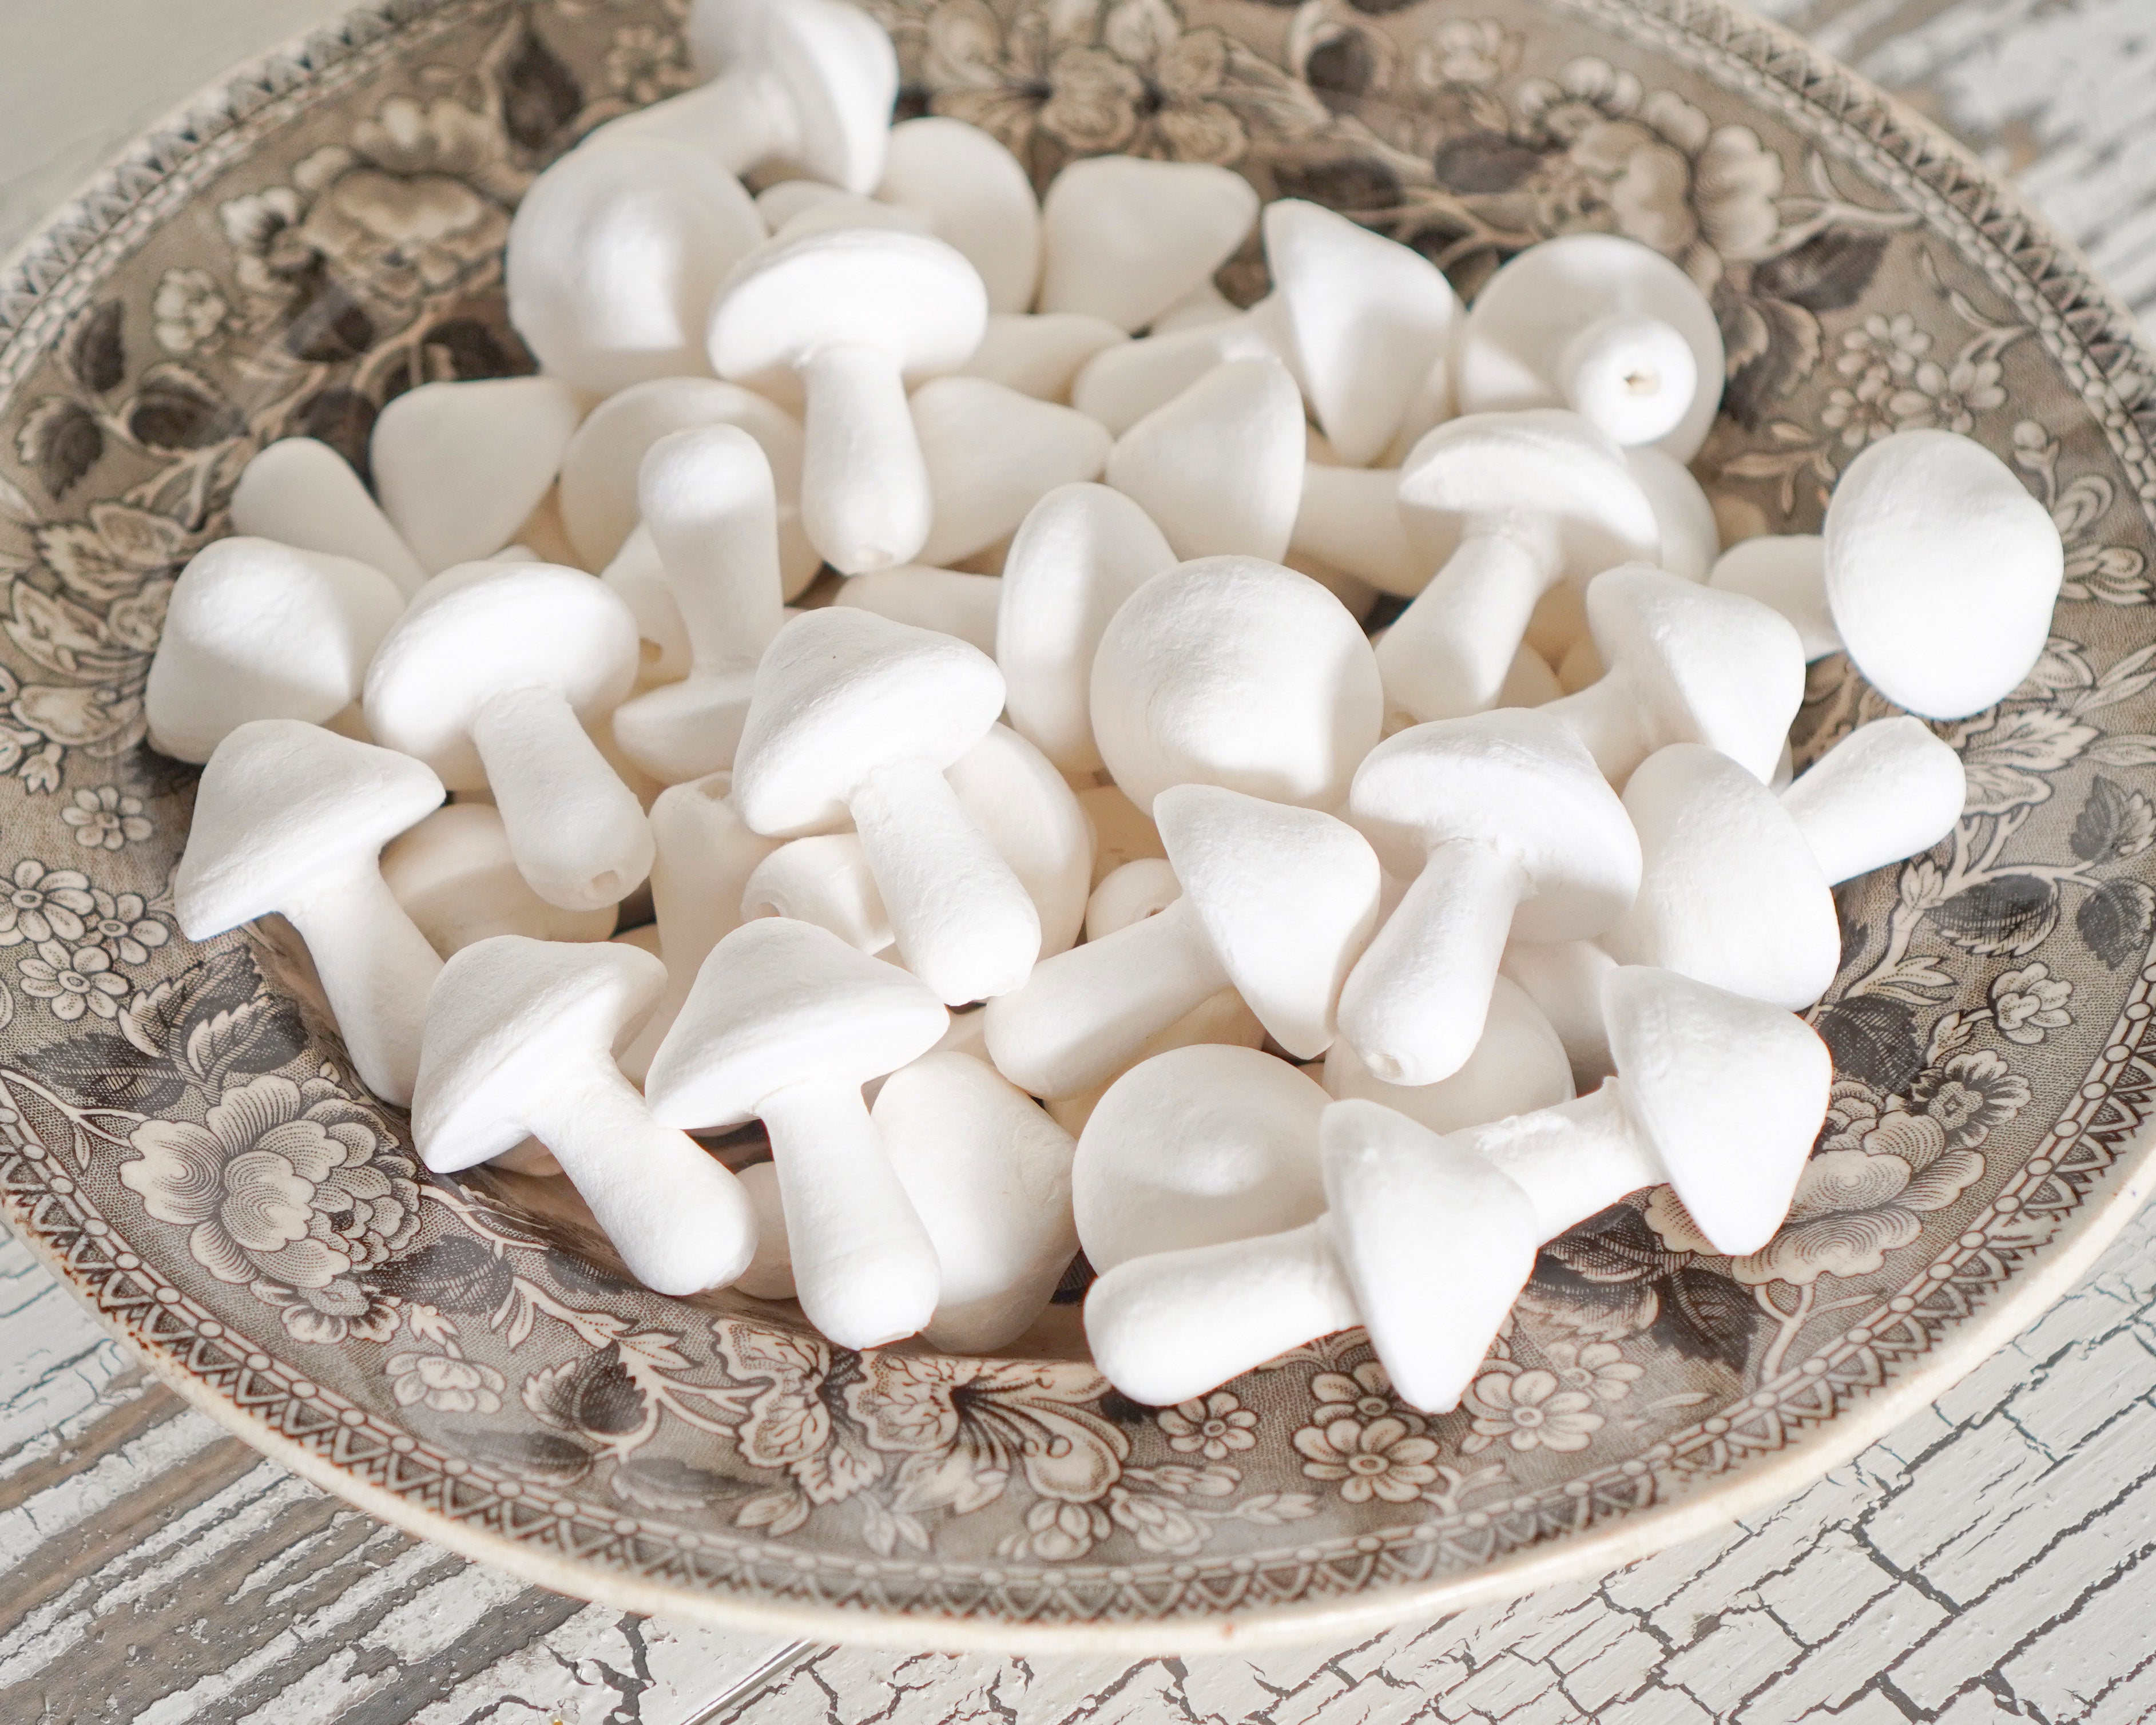 Bulk Fairy Tale Mushrooms - Vintage-Style Spun Cotton Craft Shapes, 50 Pcs.